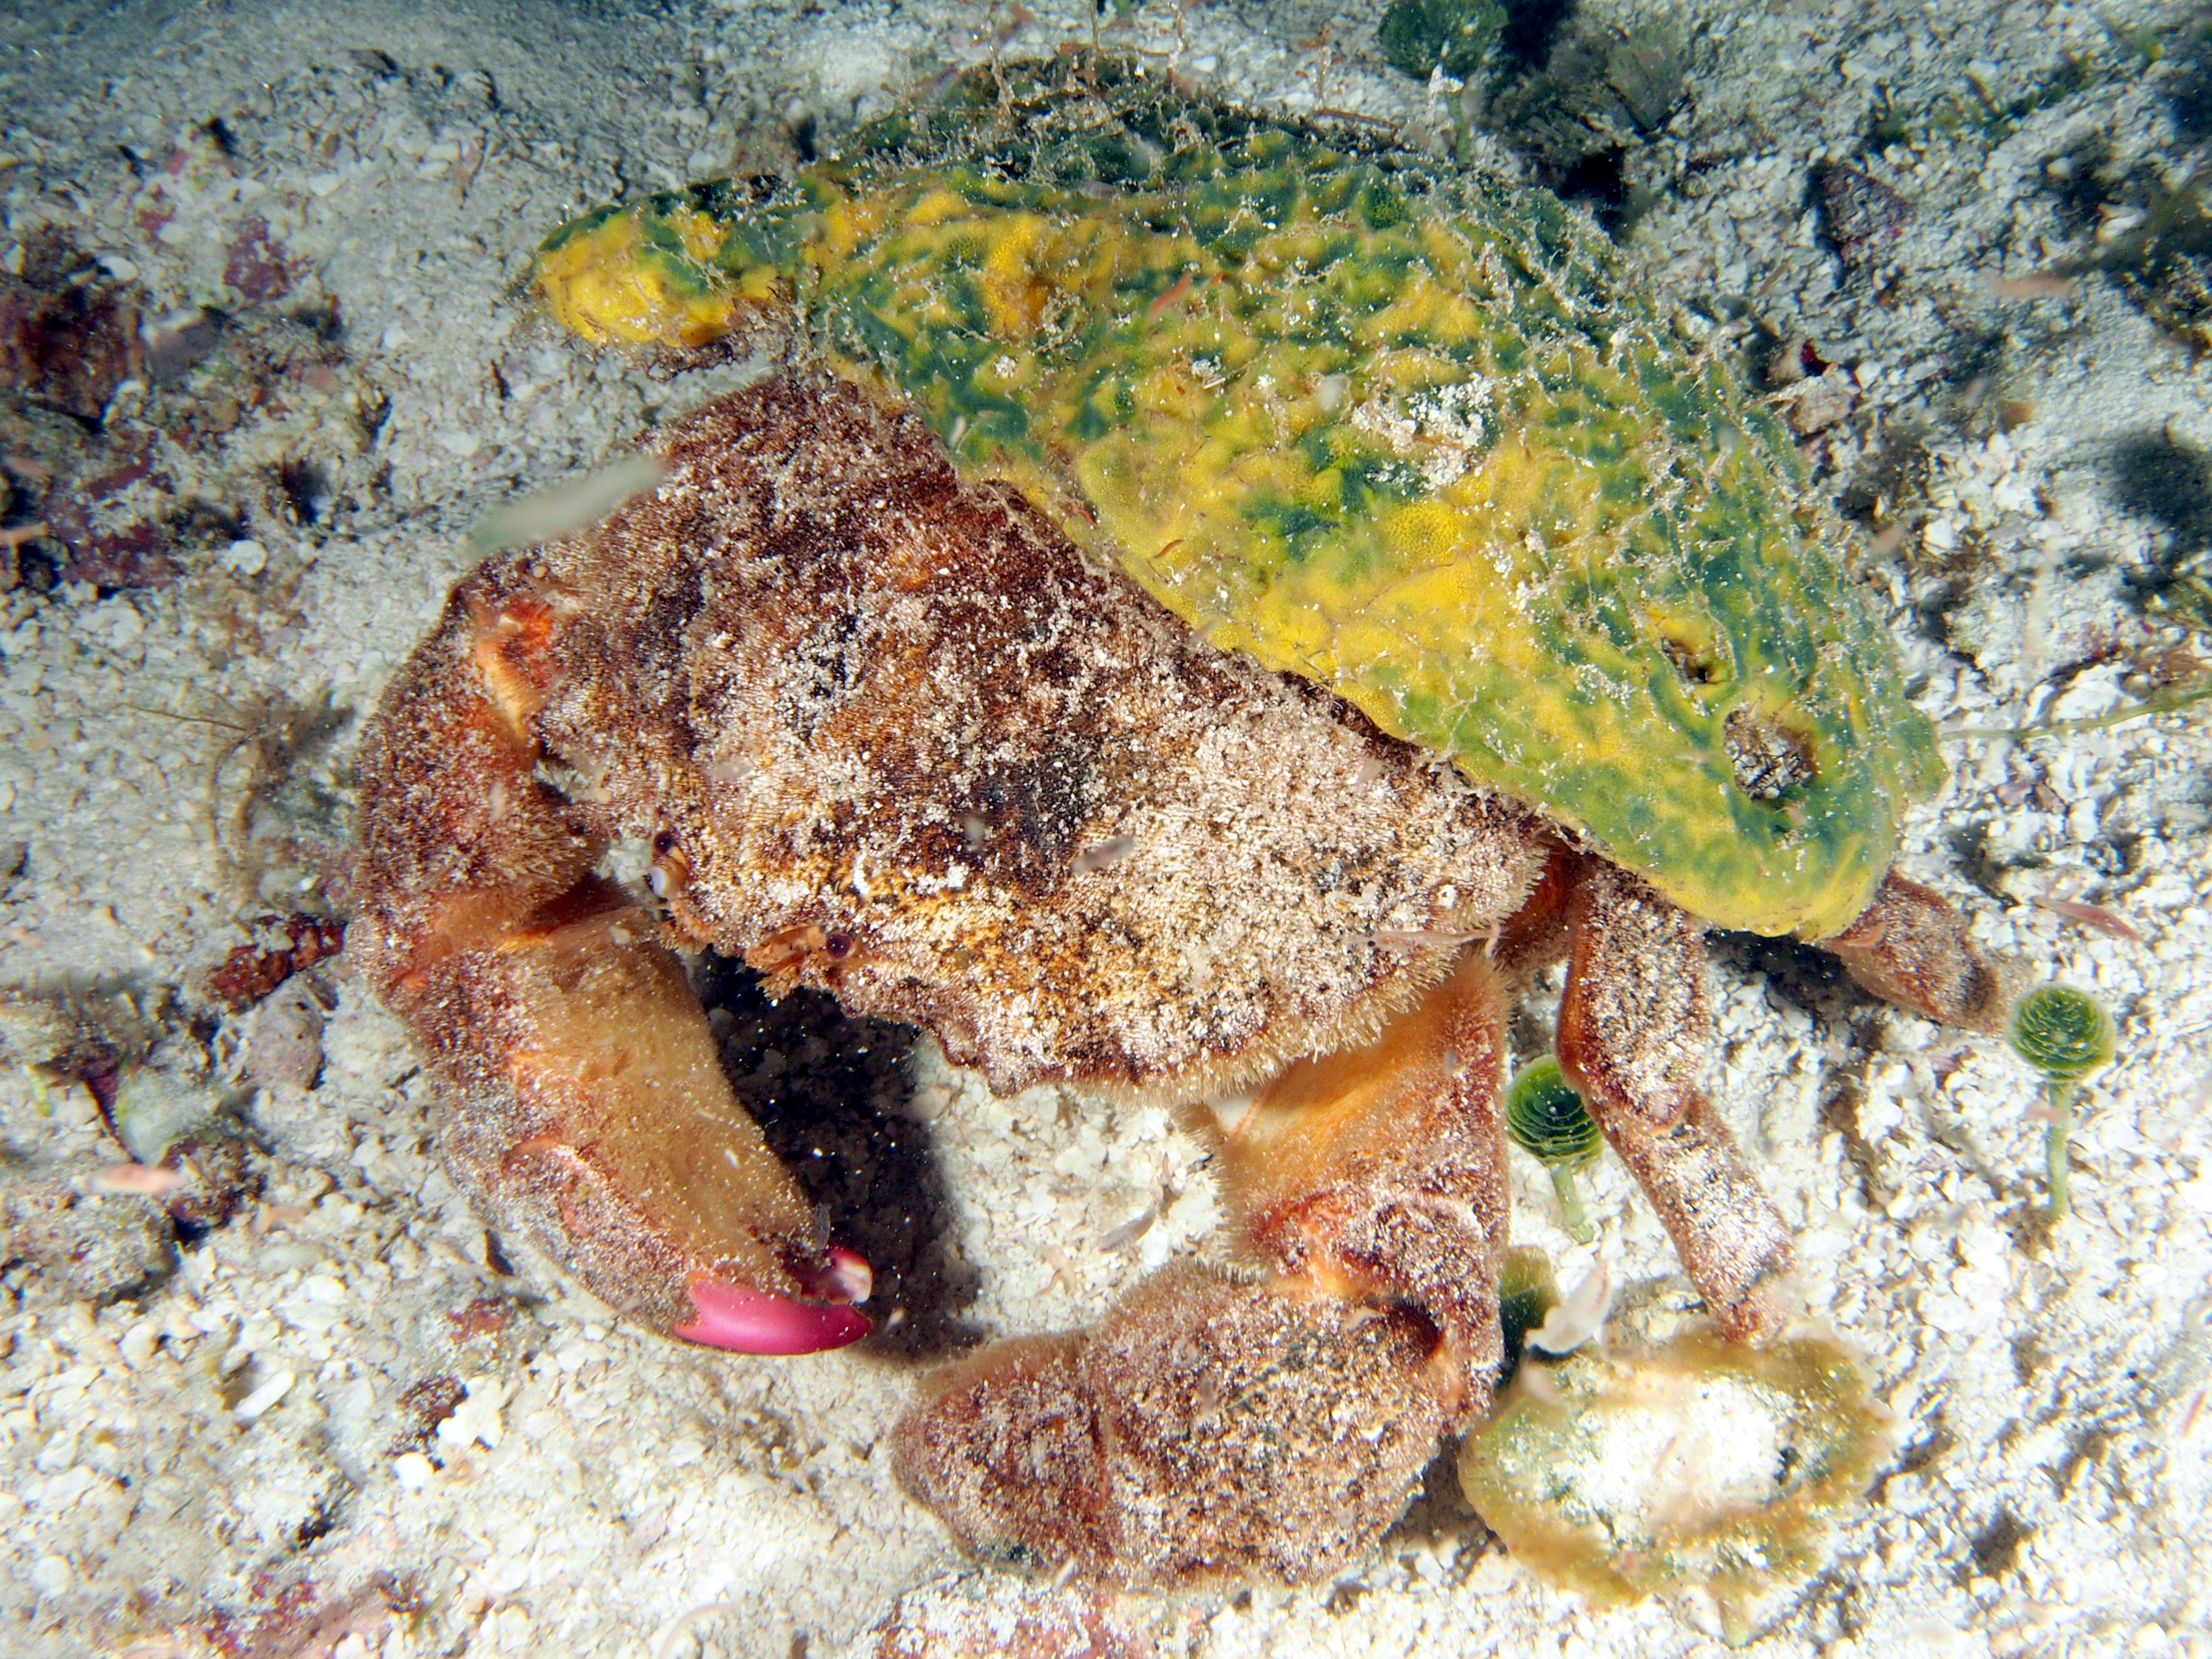 Redeye Sponge Crab - Dromia erythropus